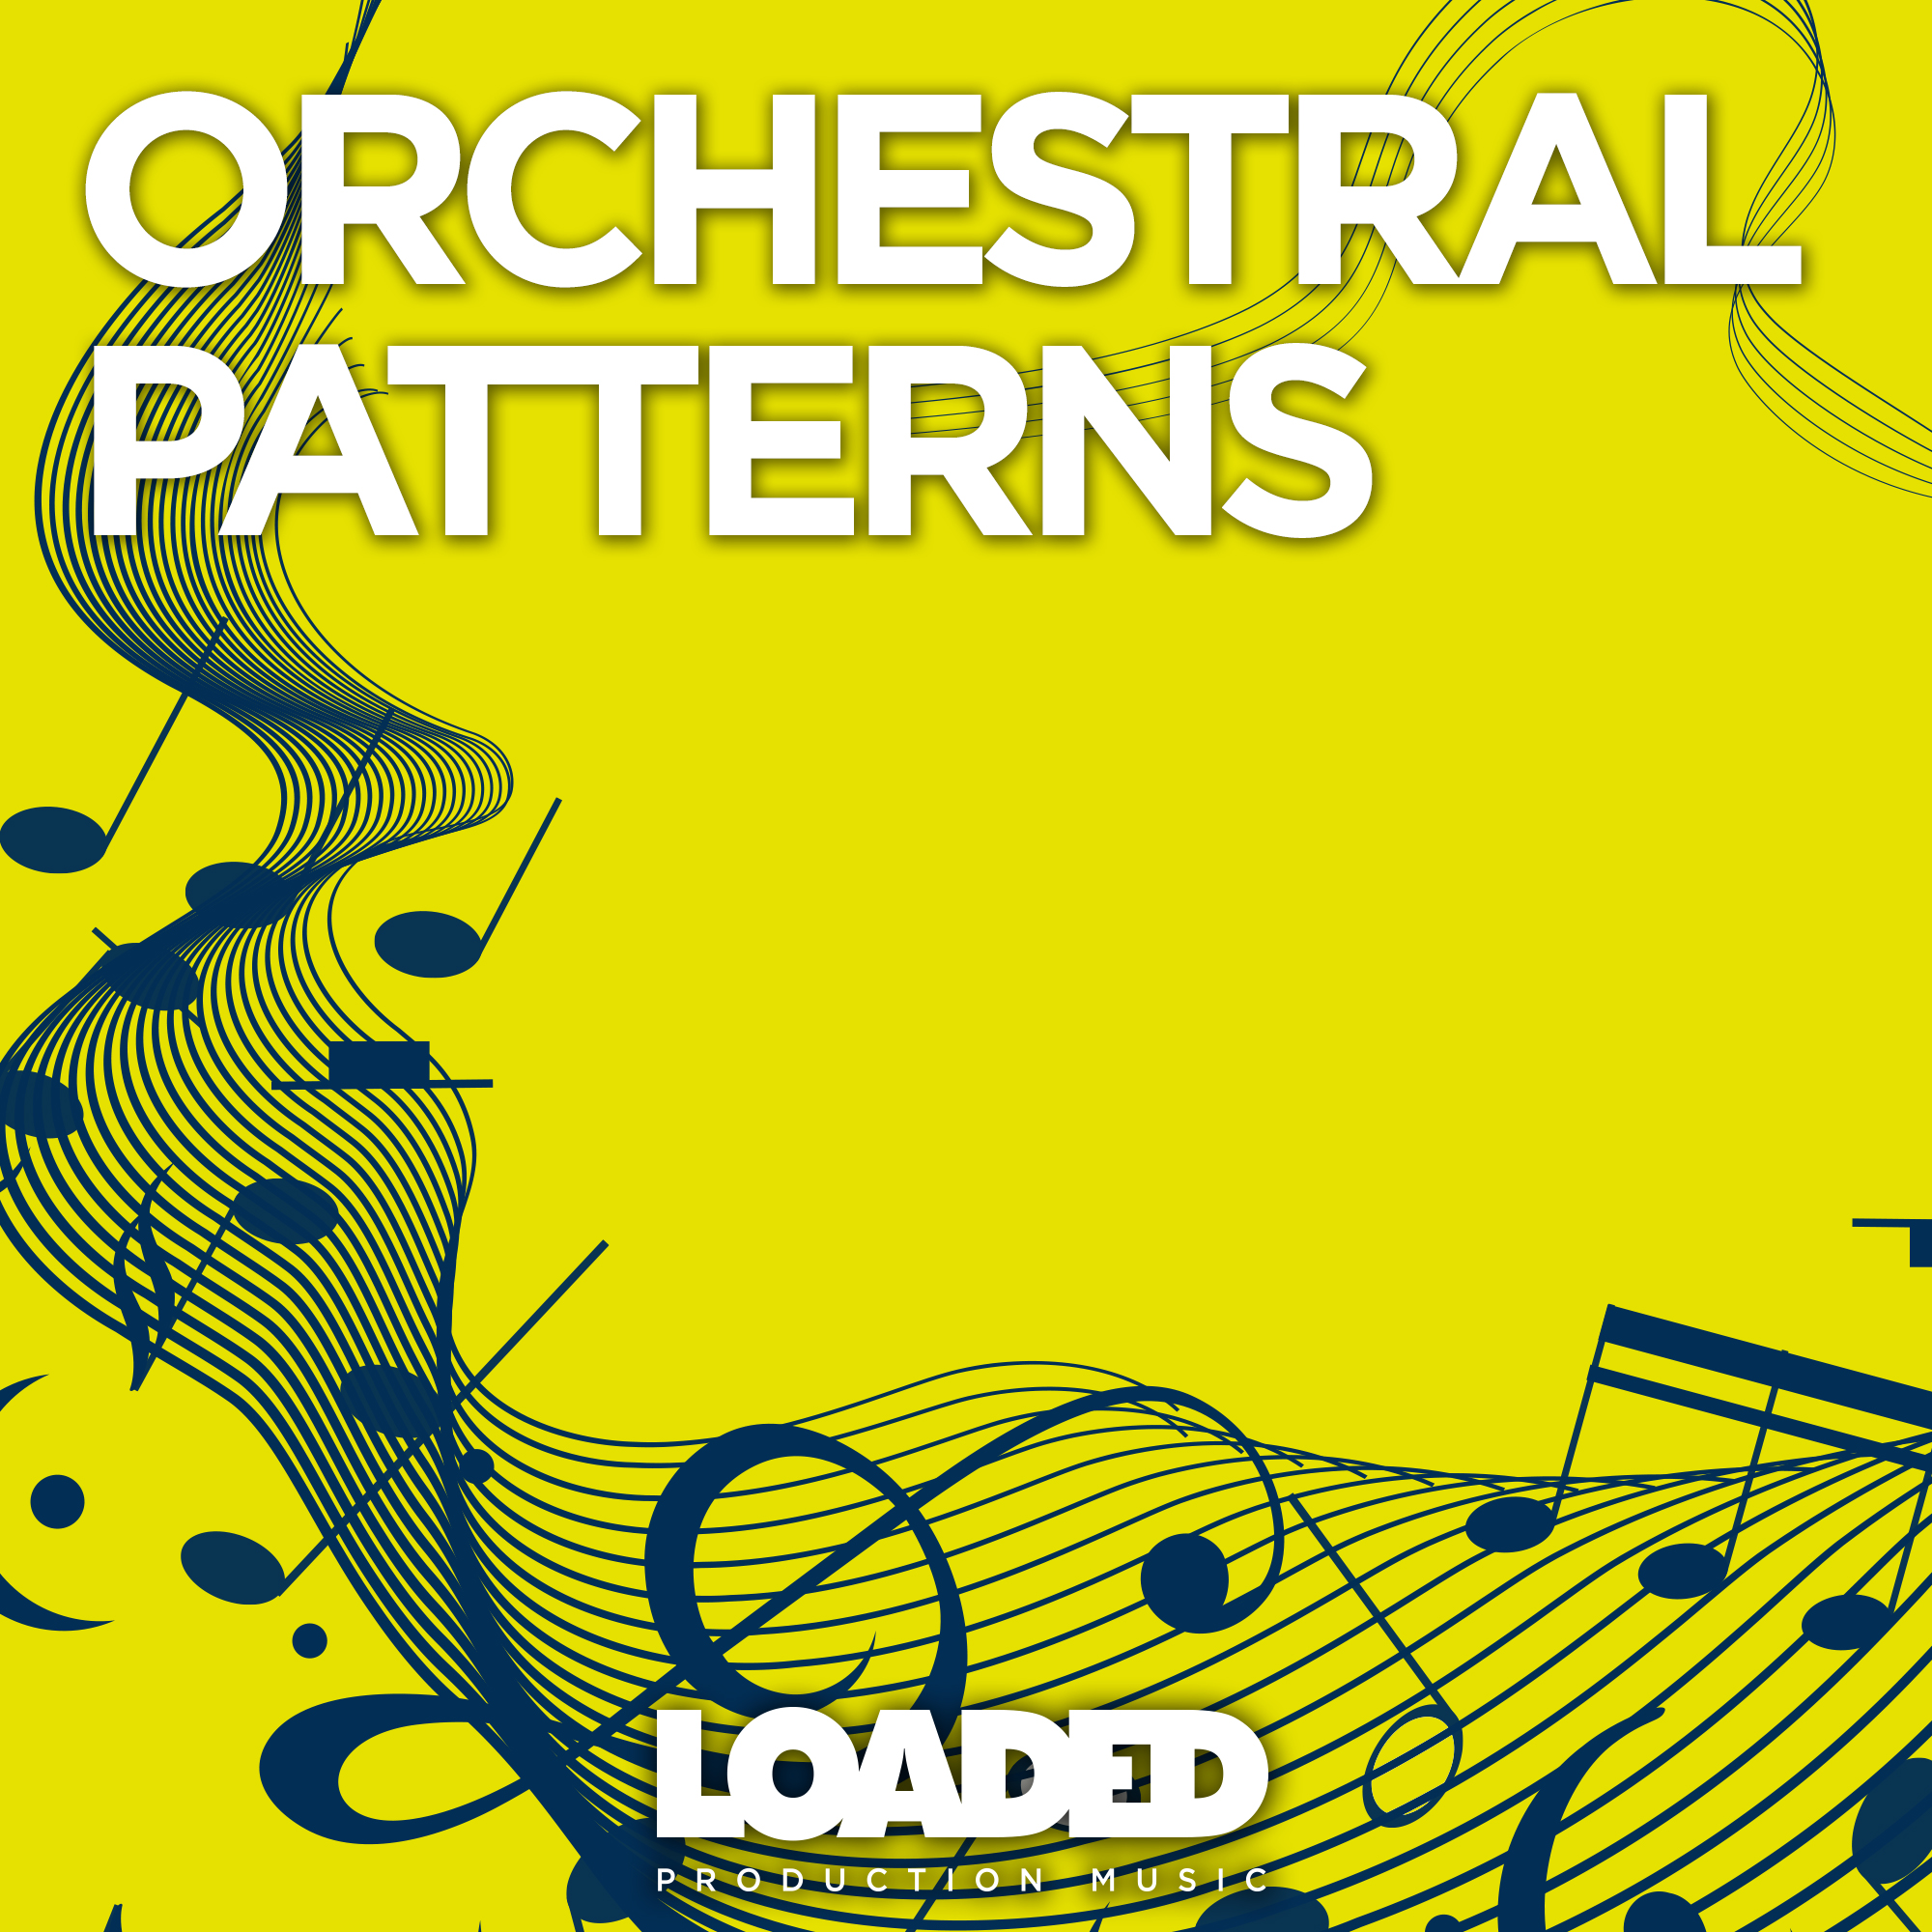 LPM 061 - Orchestral Patterns - Album Cover